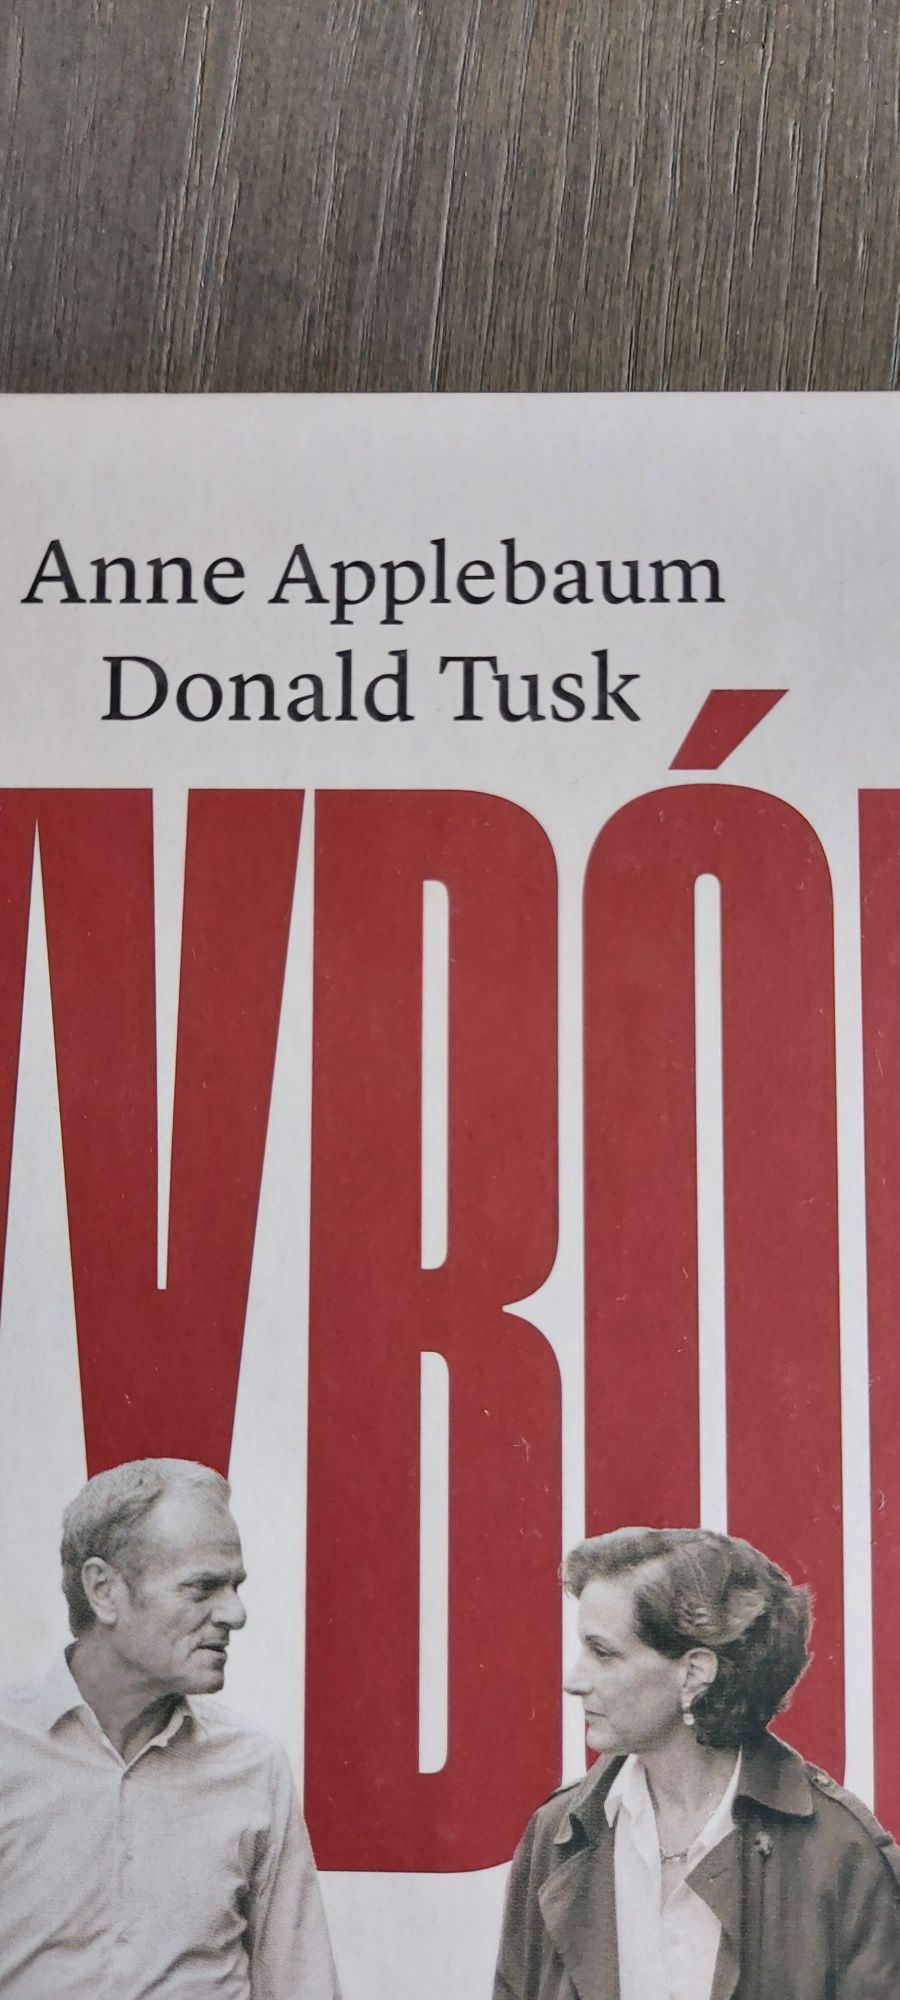 WYBOR Donald Tusk Anne applebaum